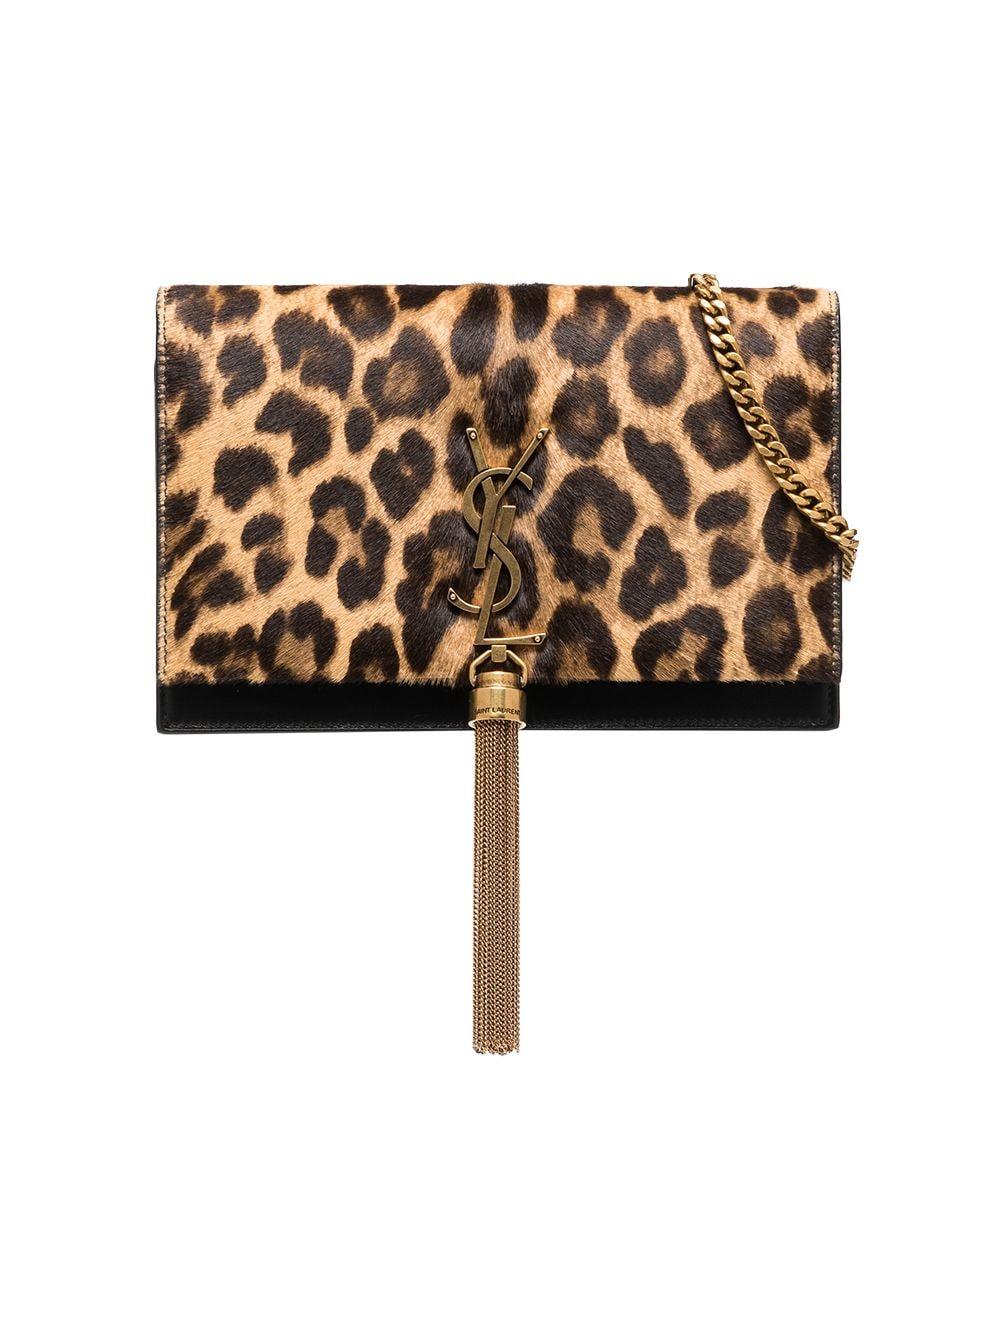 NEW Kate Landry Cheetah LEOPARD Handbag Purse Brown Macys NWT Black